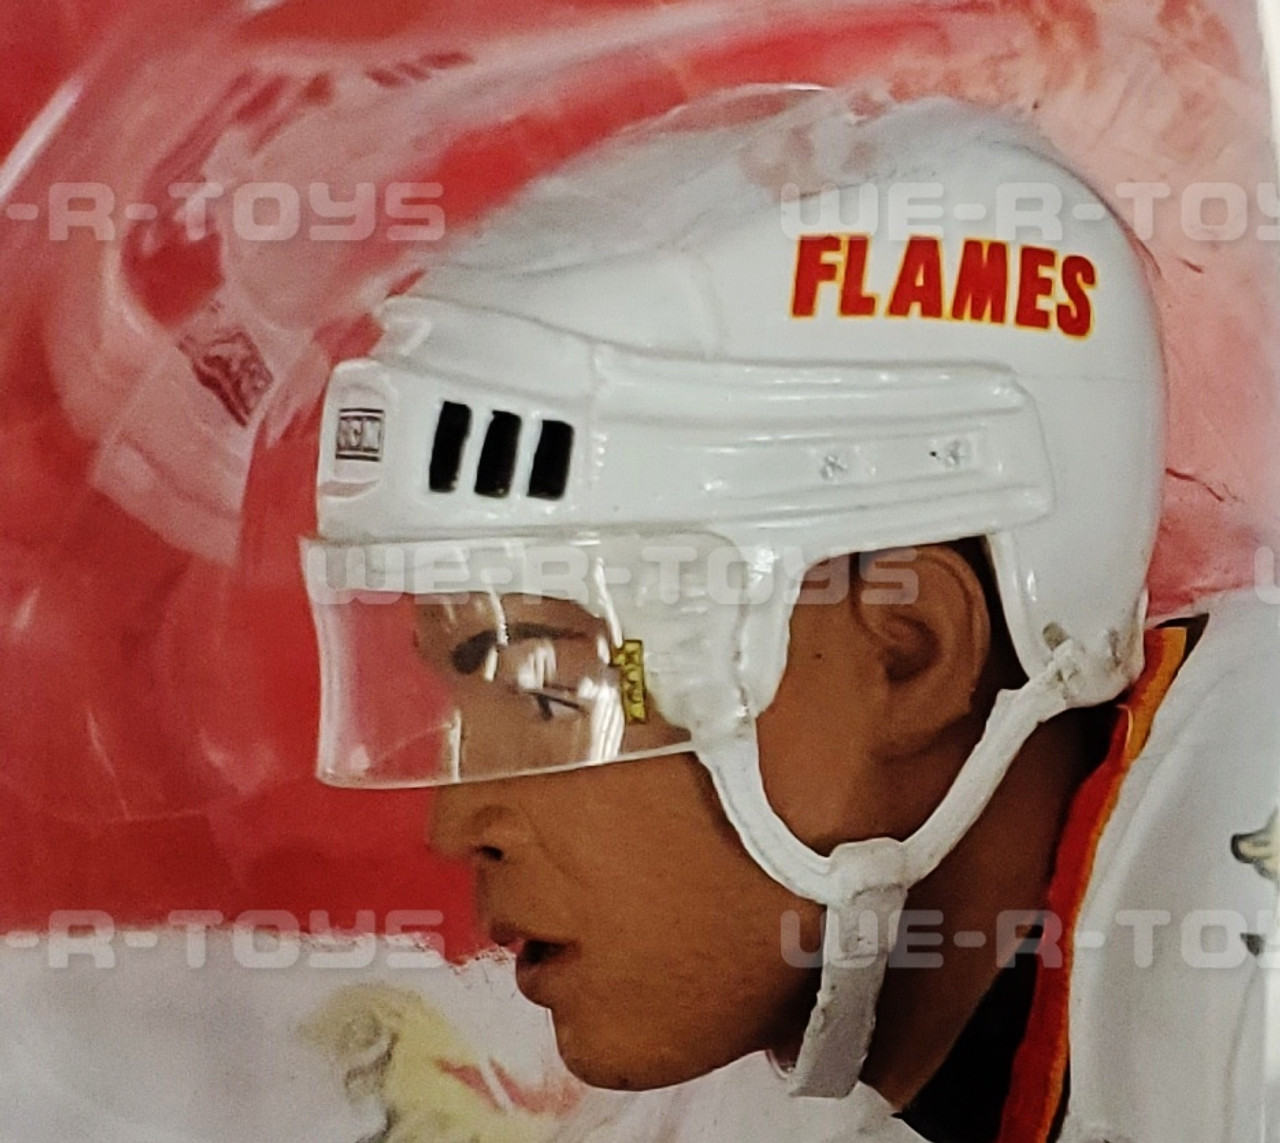 NHL Hockey - Jarome Iginla Calgary Flames Pop! Vinyl Figure